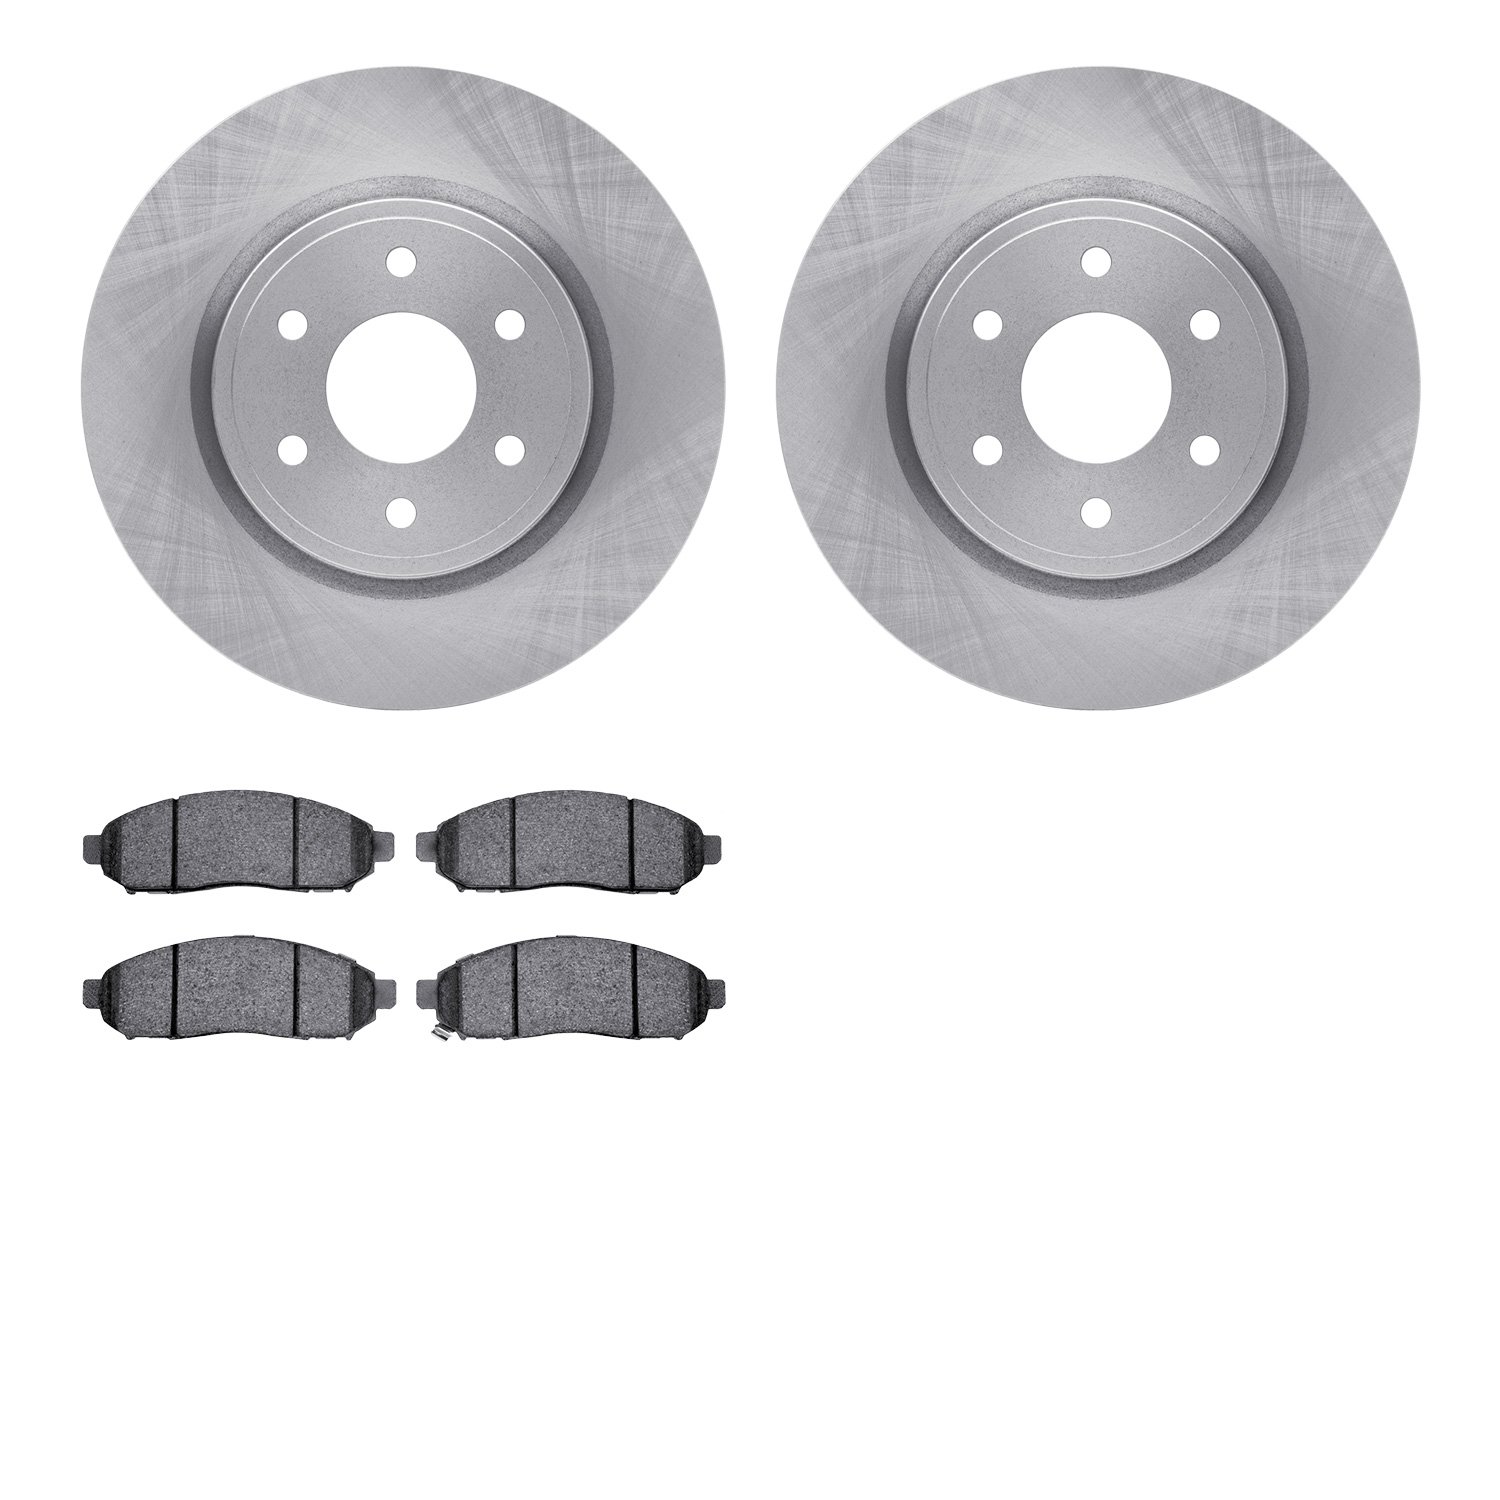 6502-67471 Brake Rotors w/5000 Advanced Brake Pads Kit, Fits Select Multiple Makes/Models, Position: Front